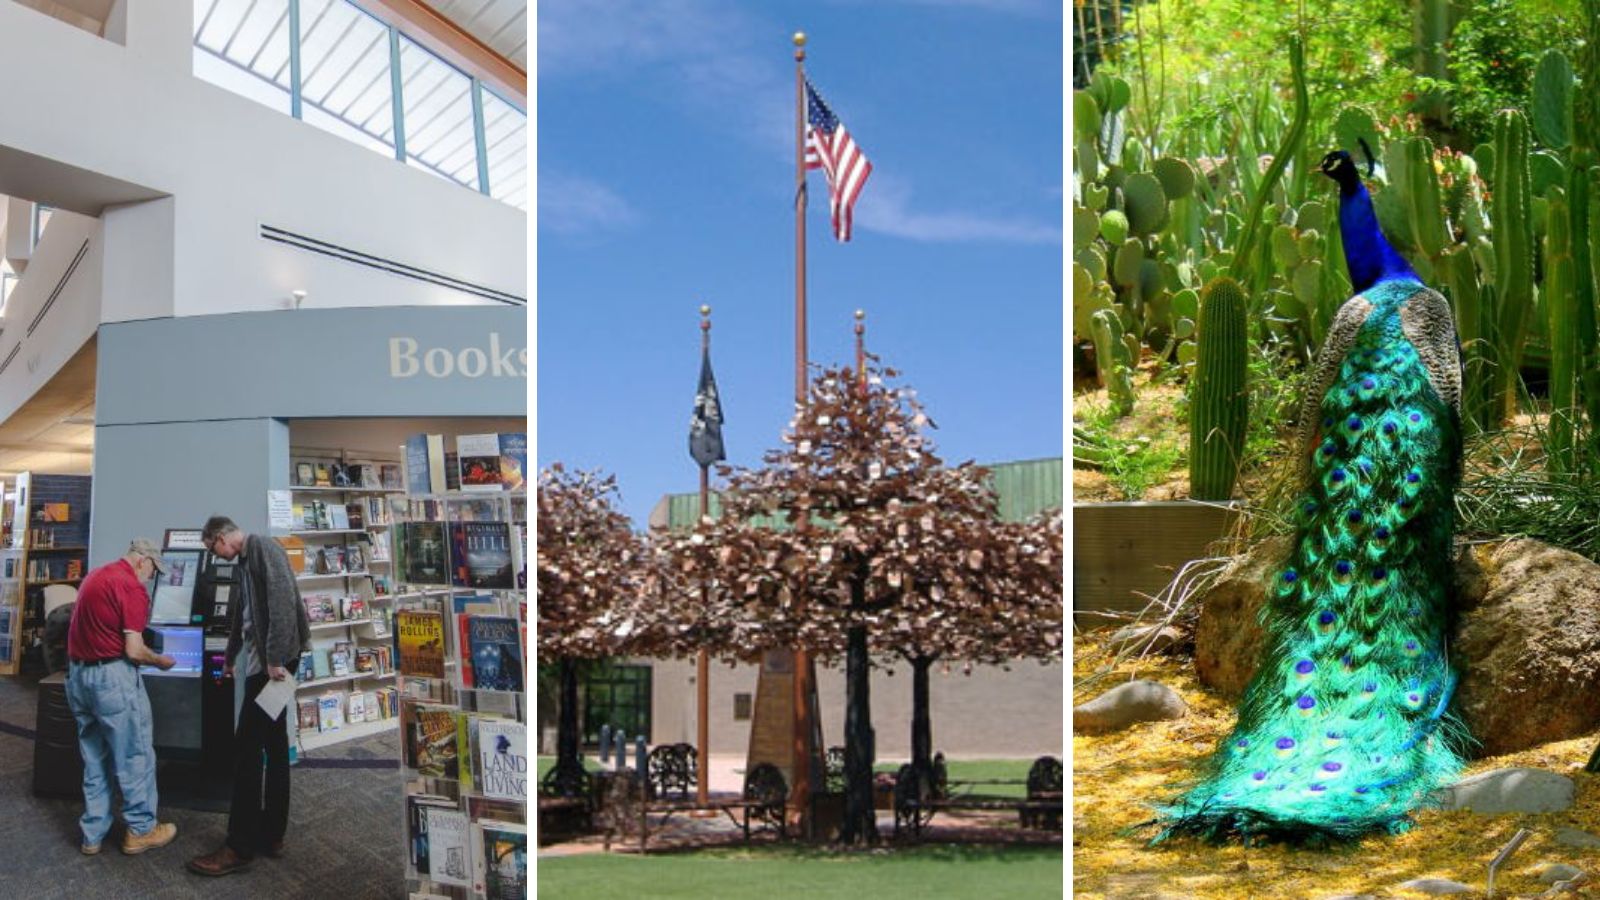 Glendale Public Library eliminates overdue fines...